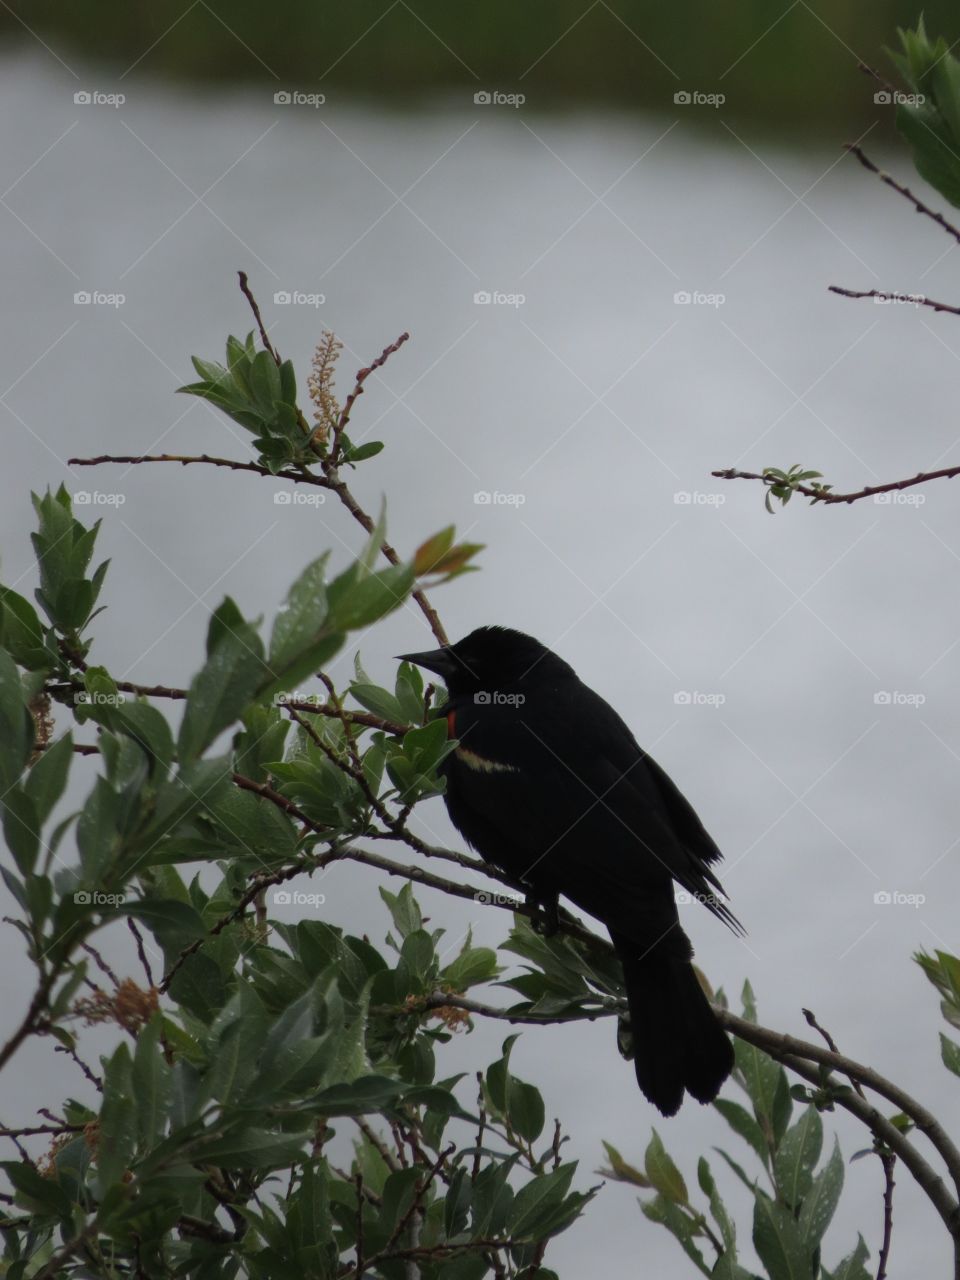 Red wing black bird, rainy day